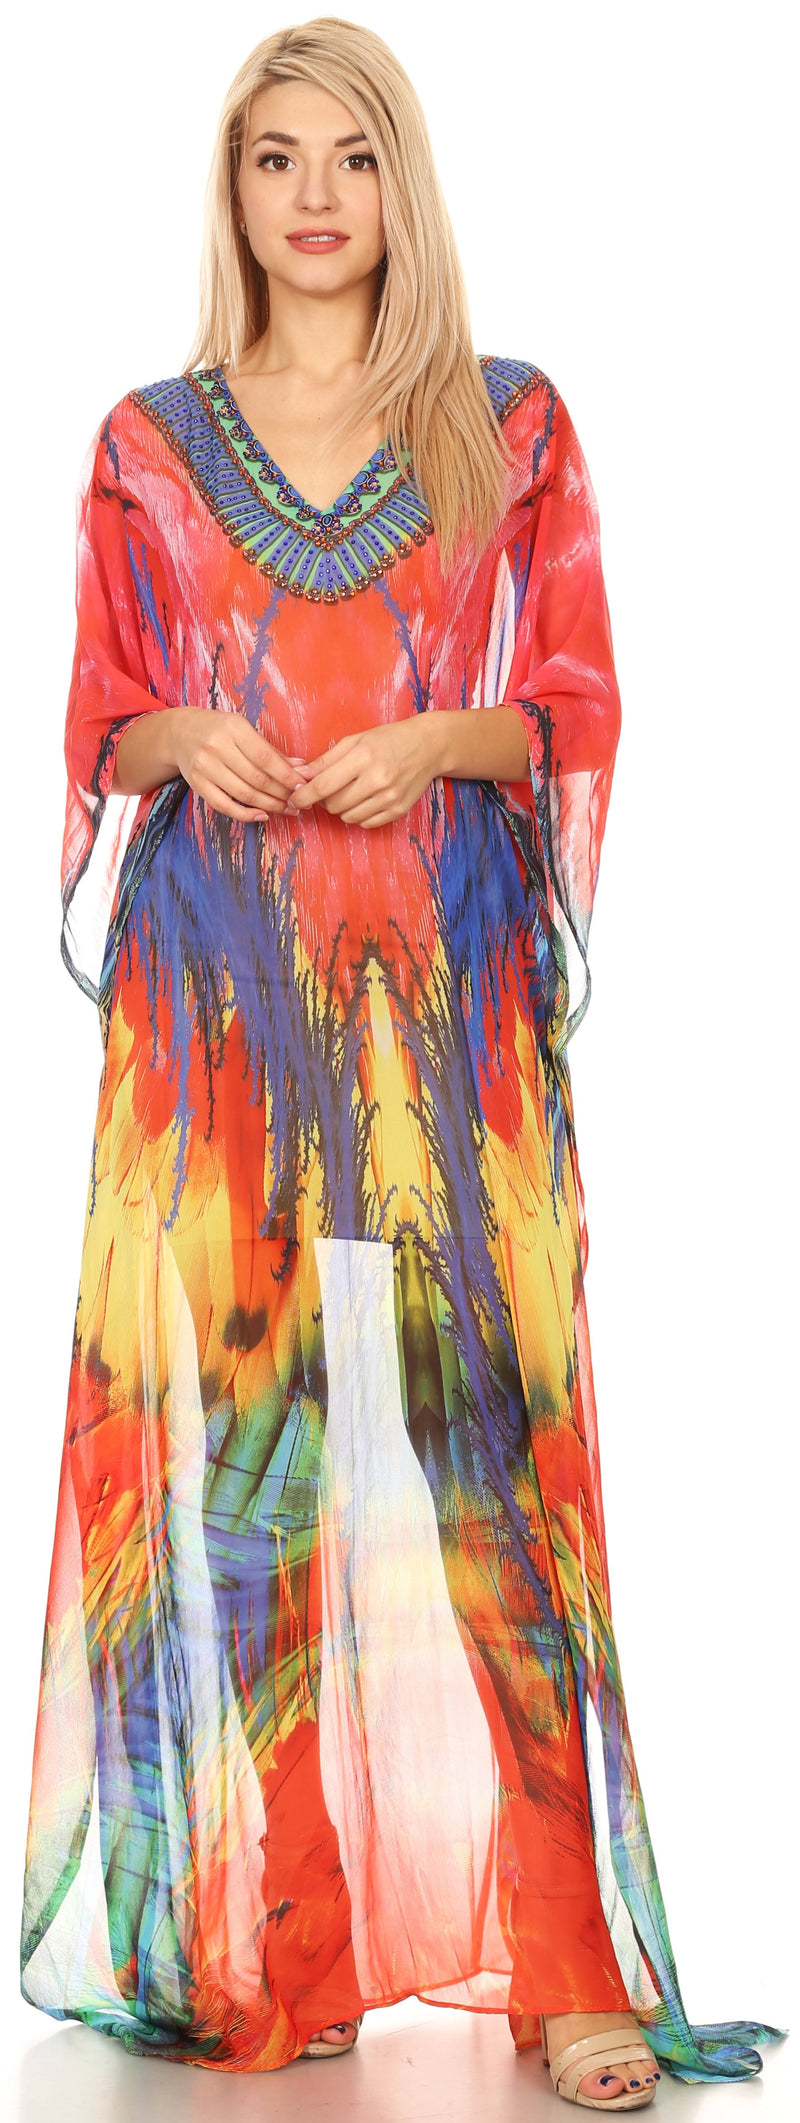 Sakkas Wilder  Printed Design Long Sheer Rhinestone Caftan Dress / Cover Up